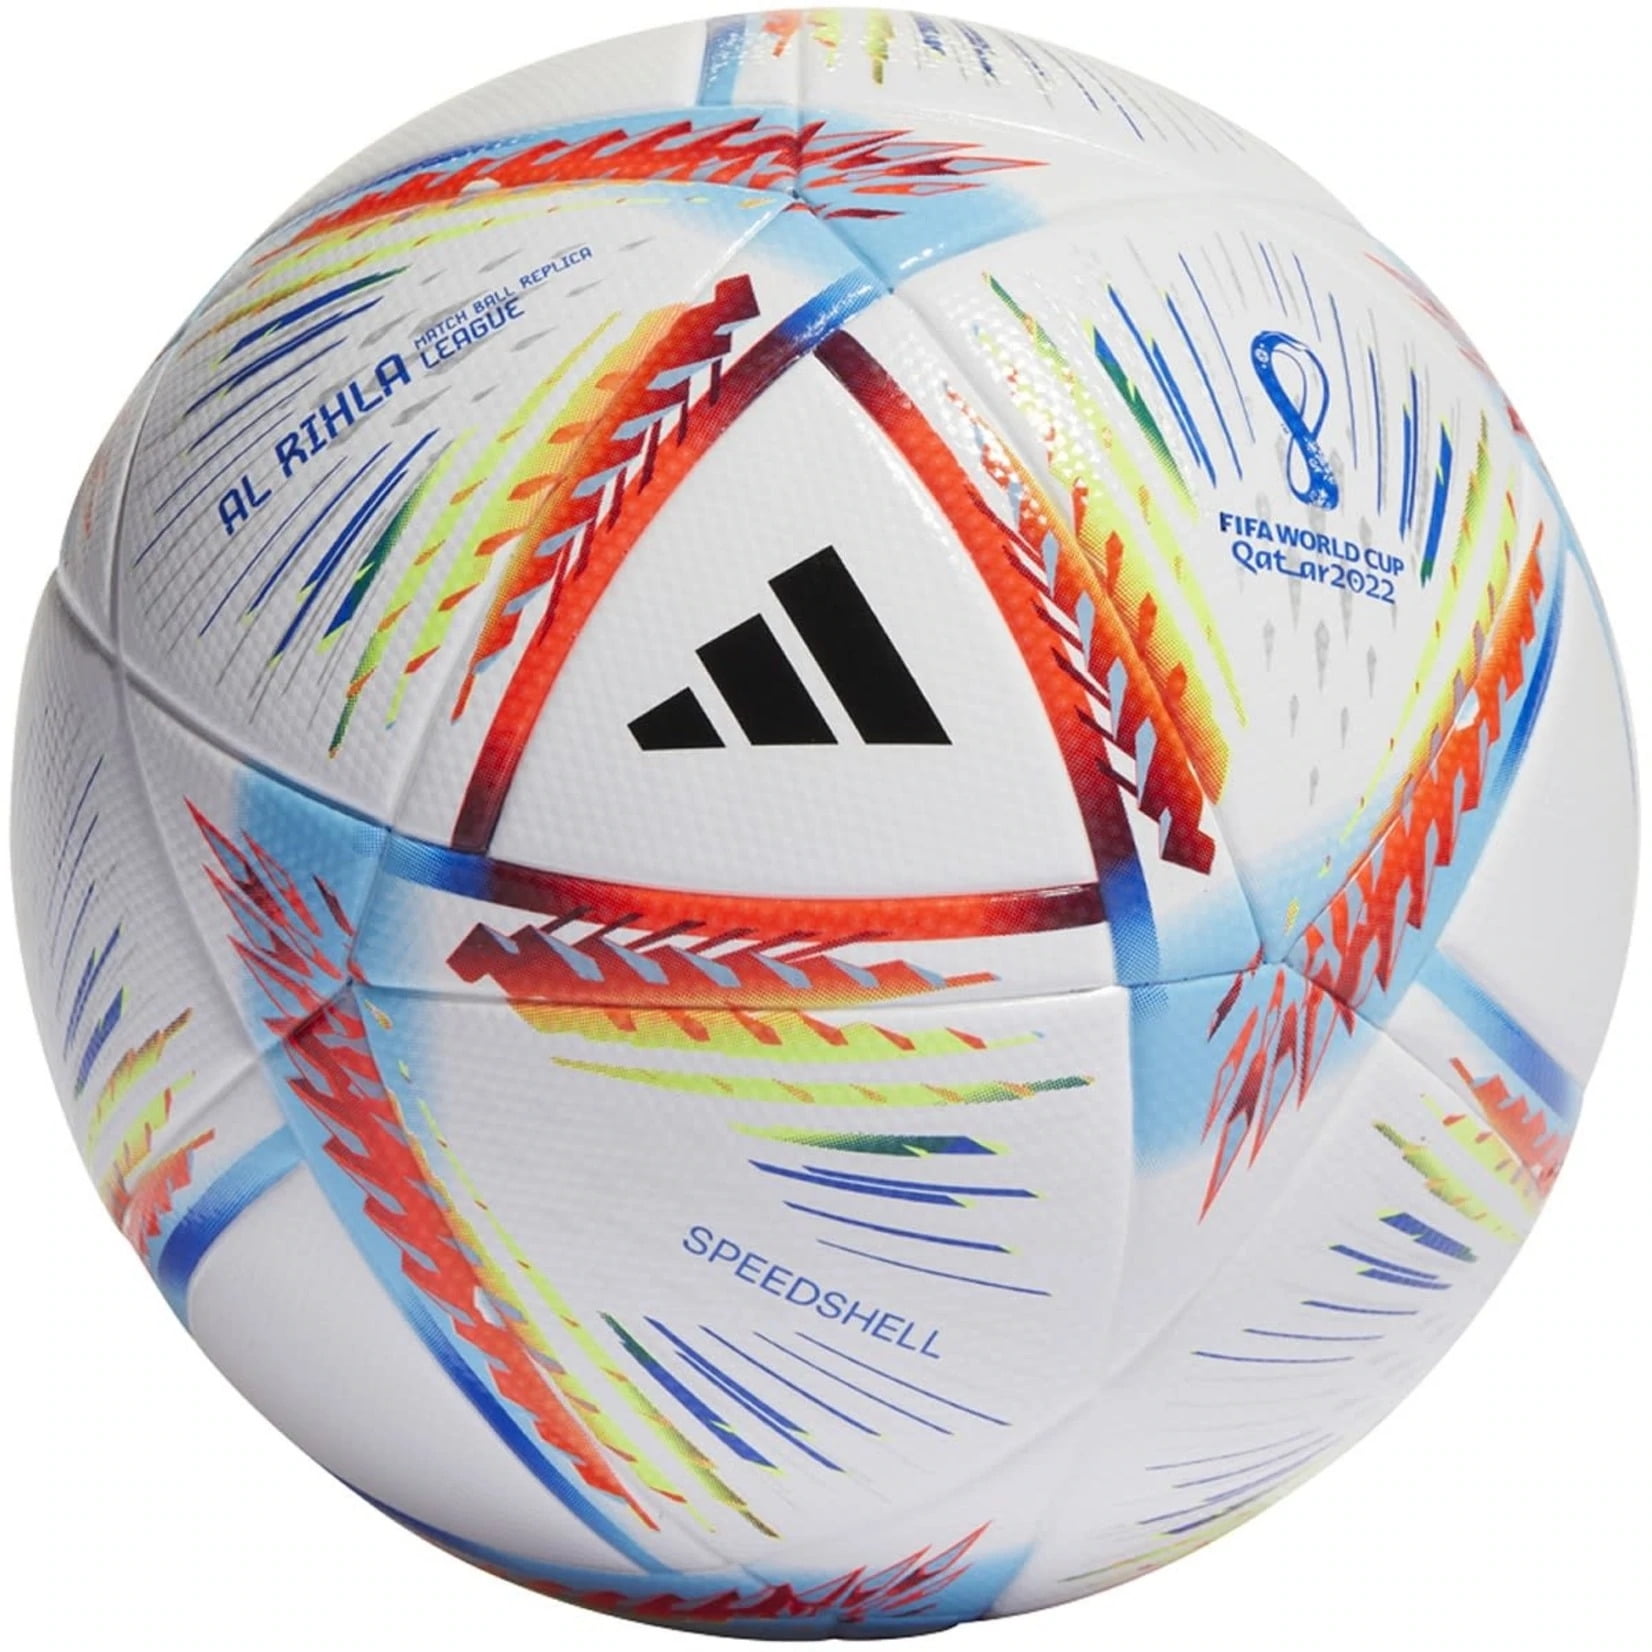 Torneado excepto por cascada Adidas AL RIHLA Match ball replica League World Cup Qatar 2022 Size 5 -  Walmart.com